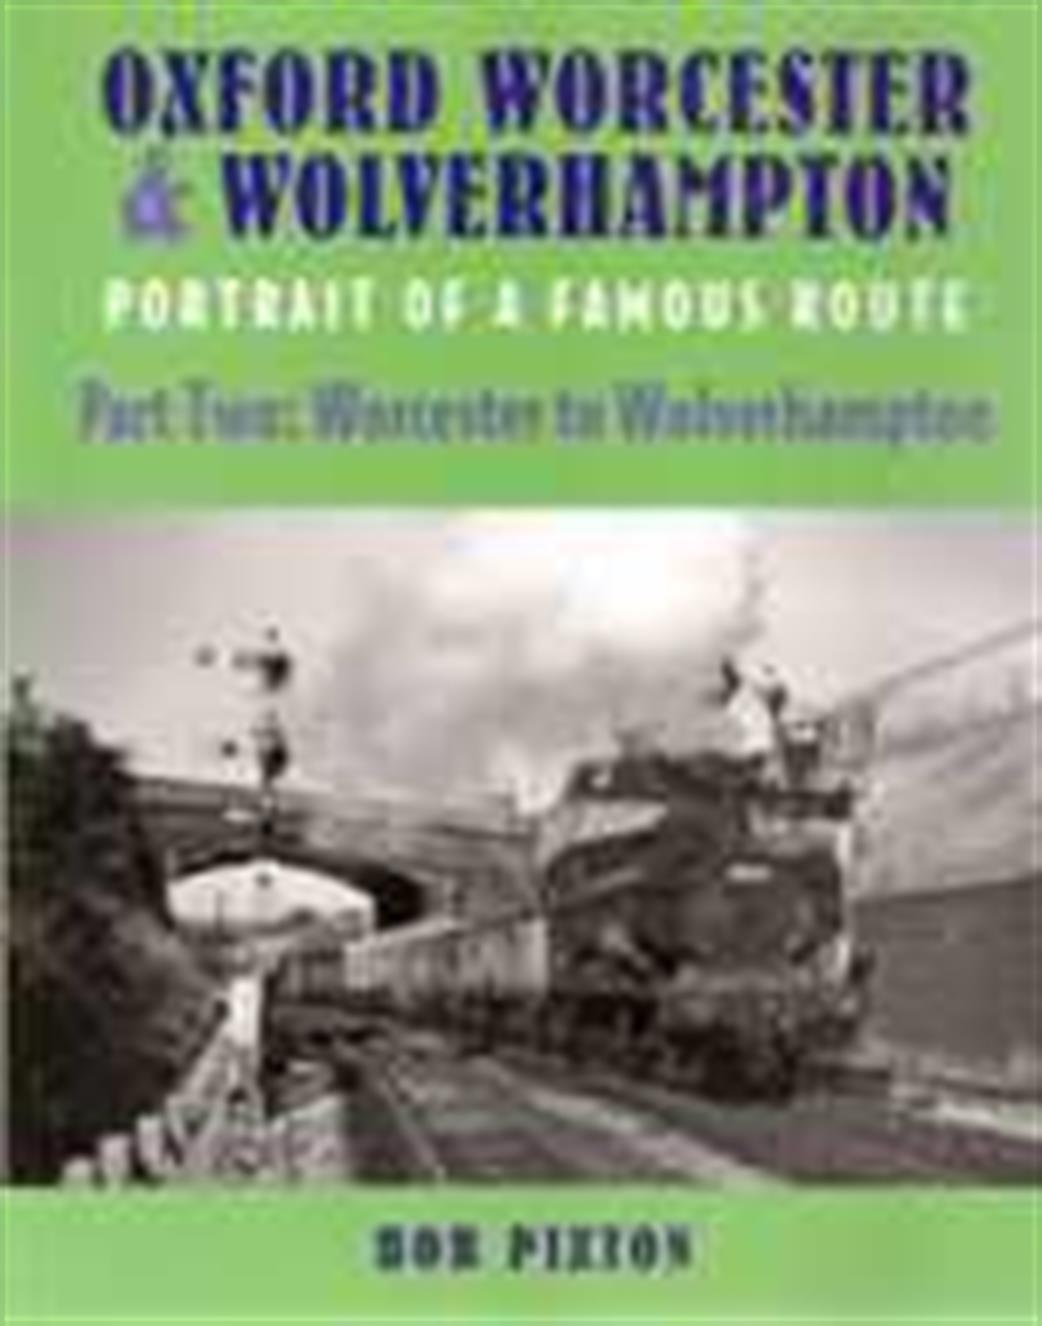 9781870754606 Oxford Worcester & Wolverhampton: Part 2 by Bob Pixton